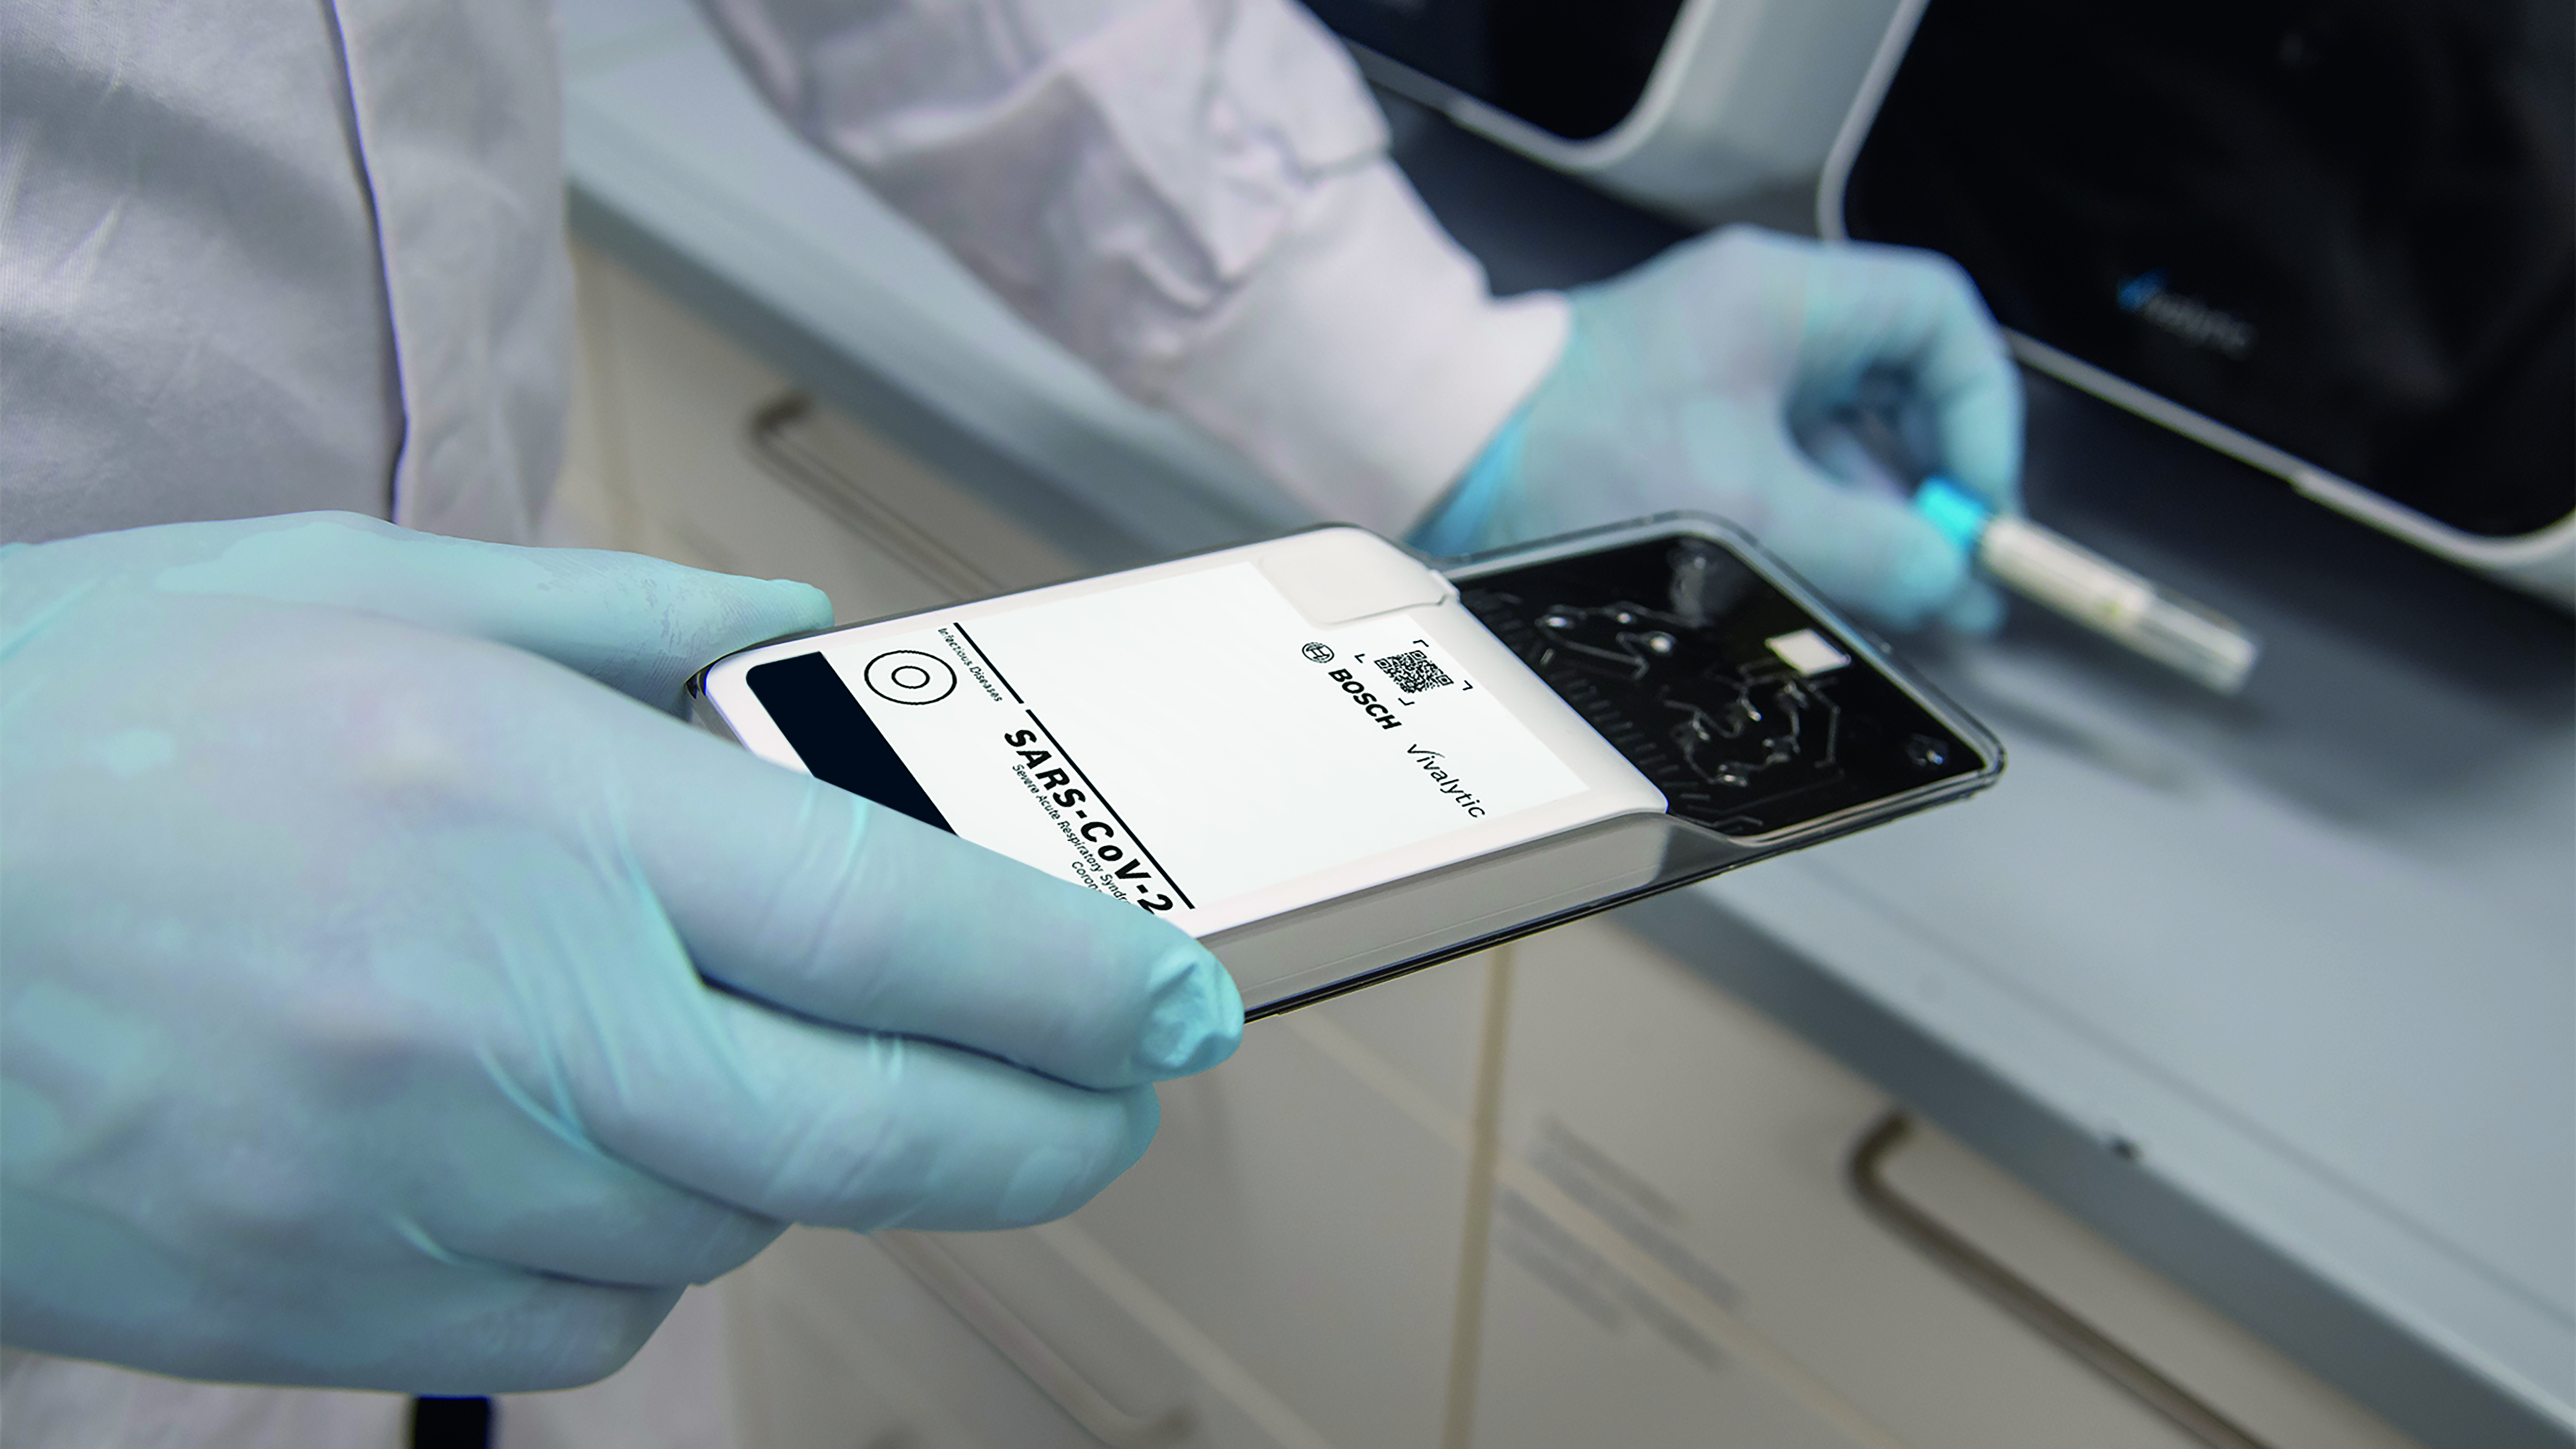 Analyser with SARS-CoV-2 test cartridge